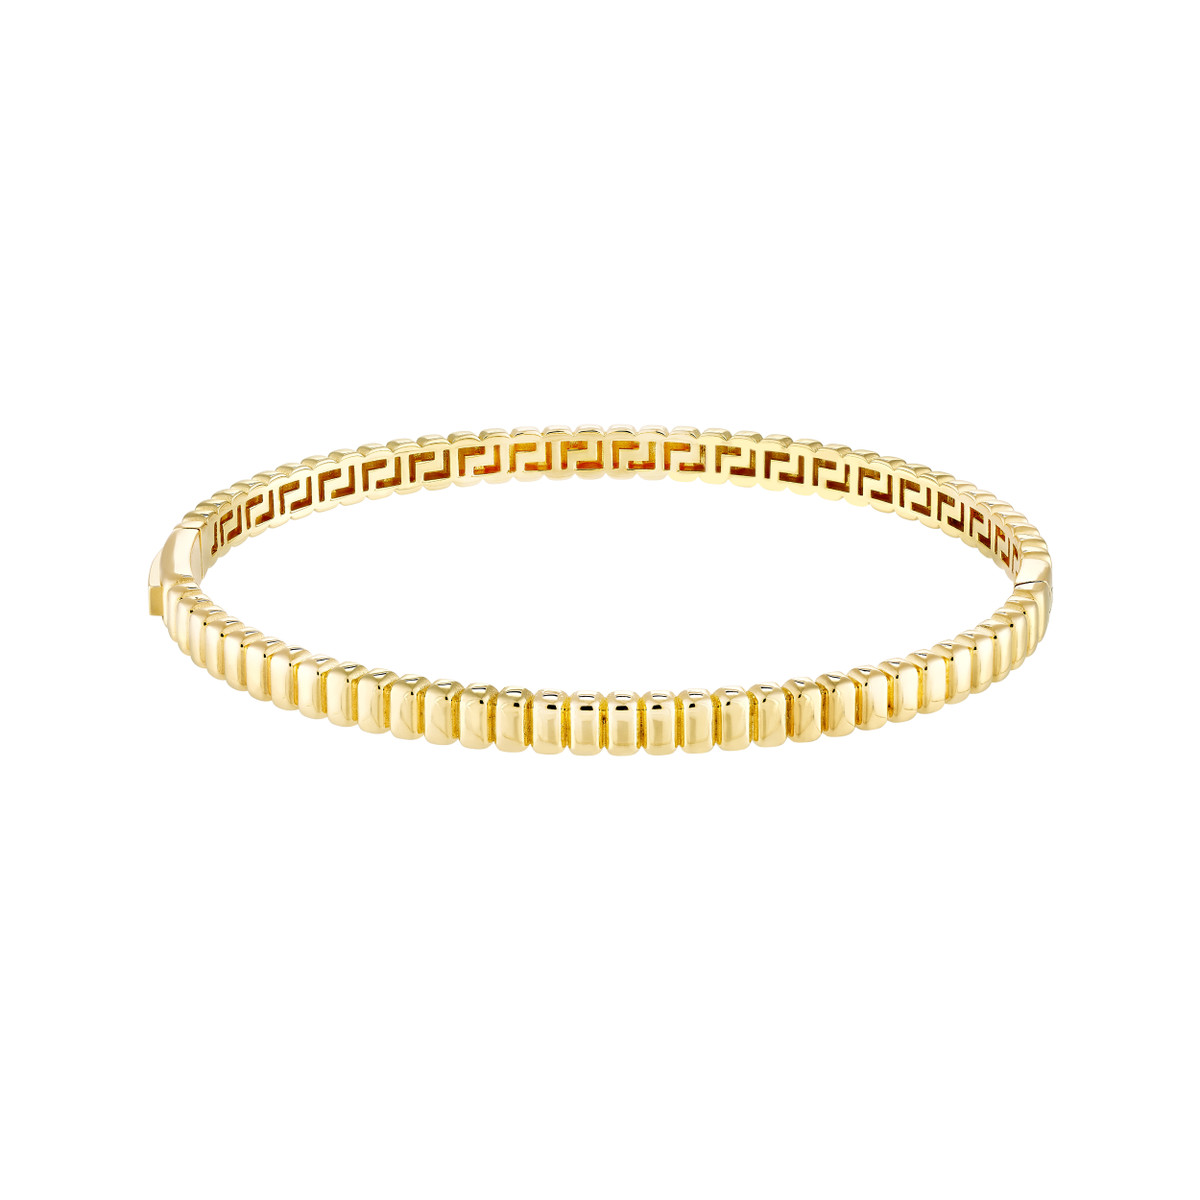 14k Gold & Diamond Bangle Bracelet Hinged with Safety Clasp